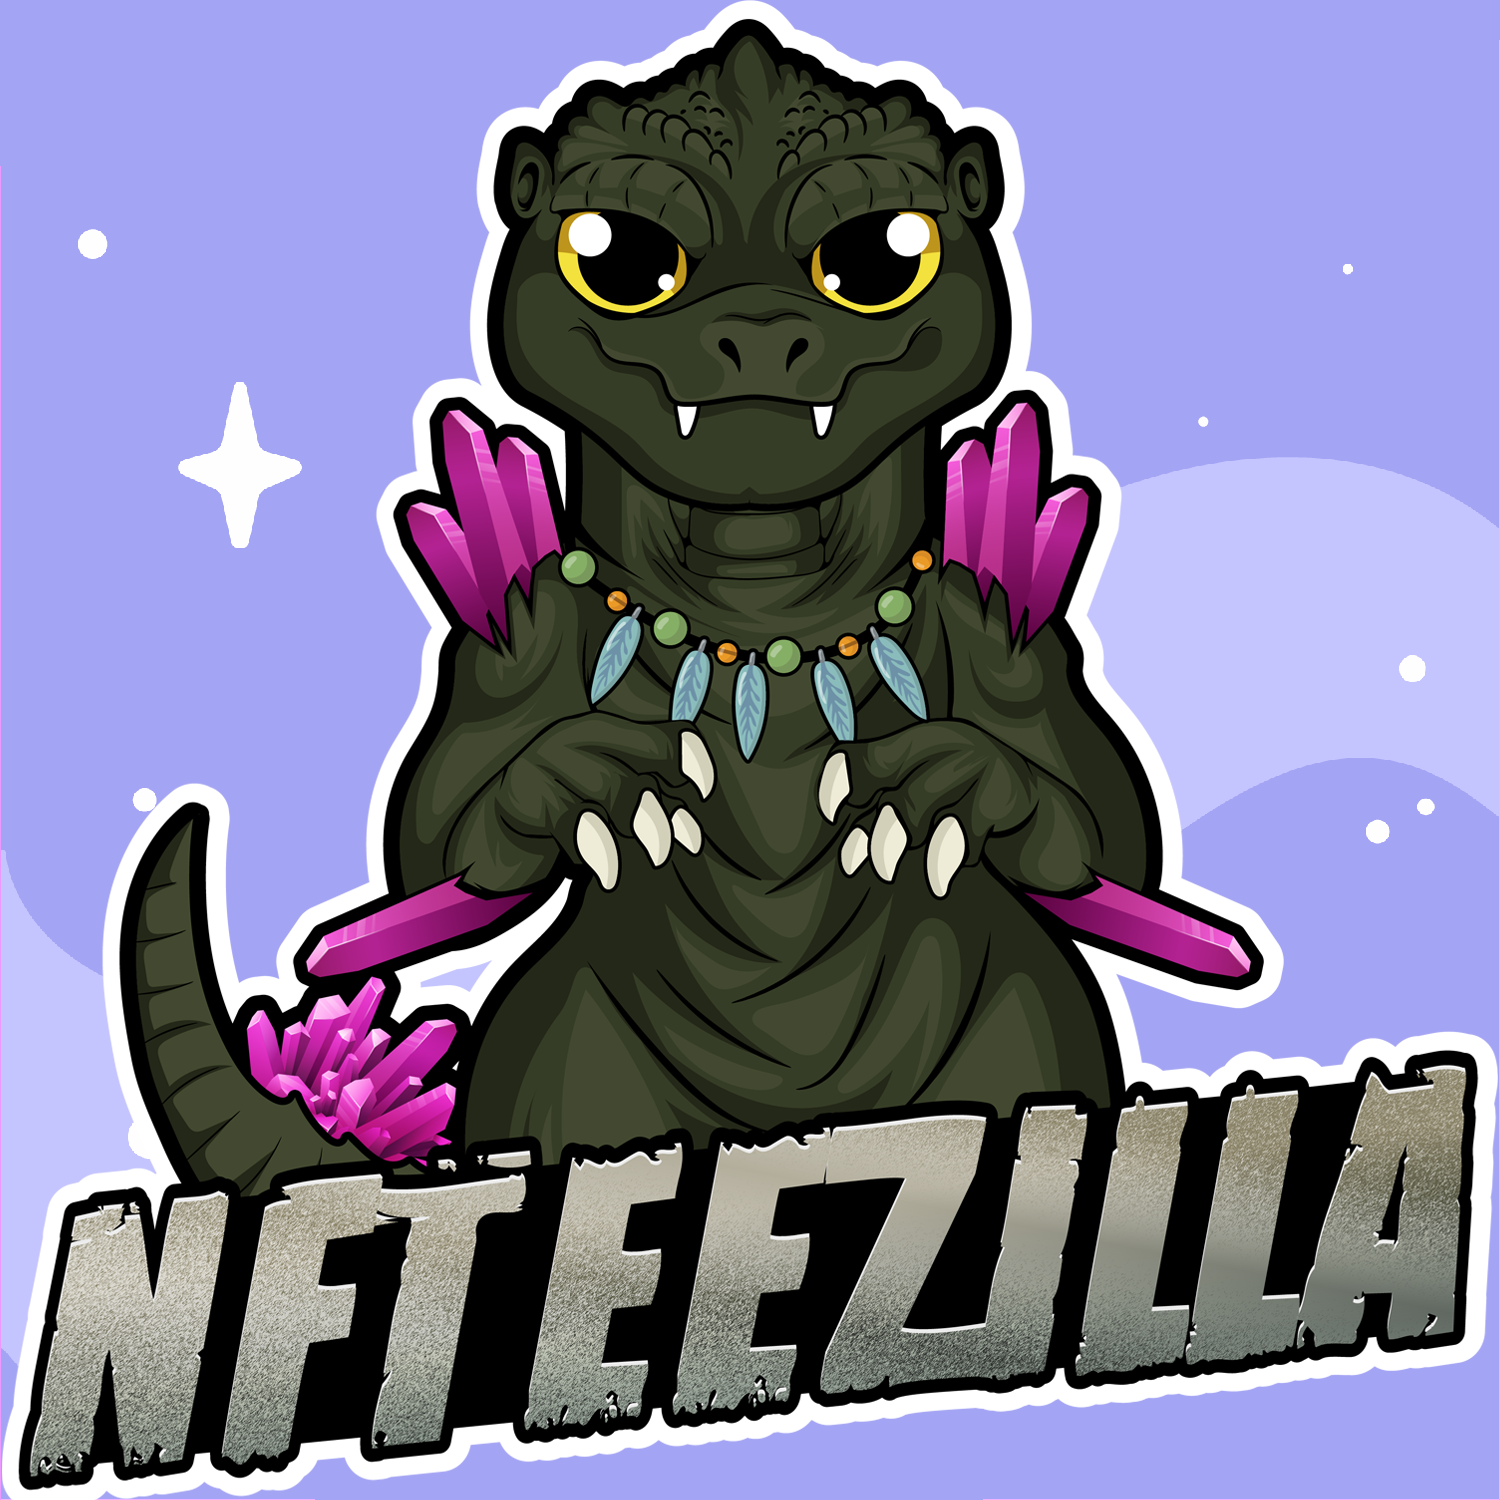 NFTEEZ.com – THE NFTEEZILLA of NFT’s